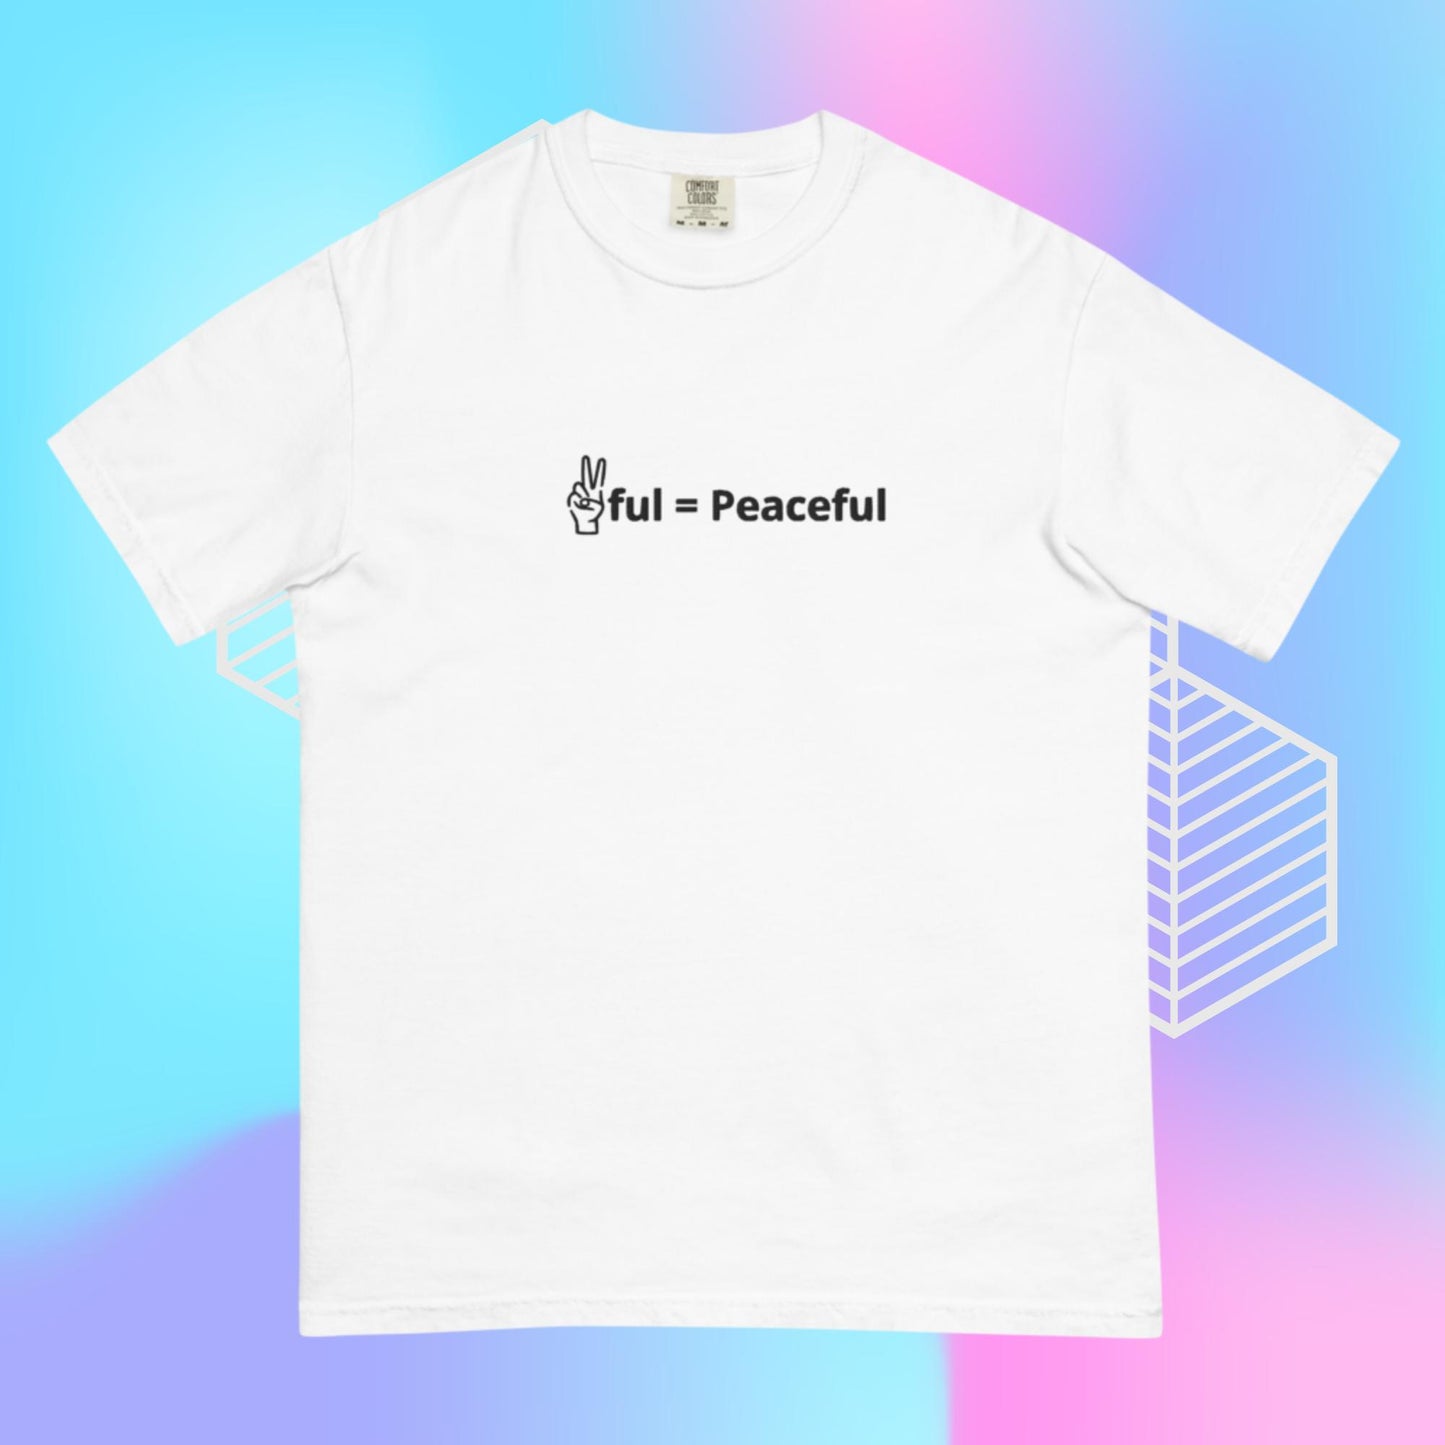 Peaceful Equation  "✌️ful Equation" T-shirt S-3XL